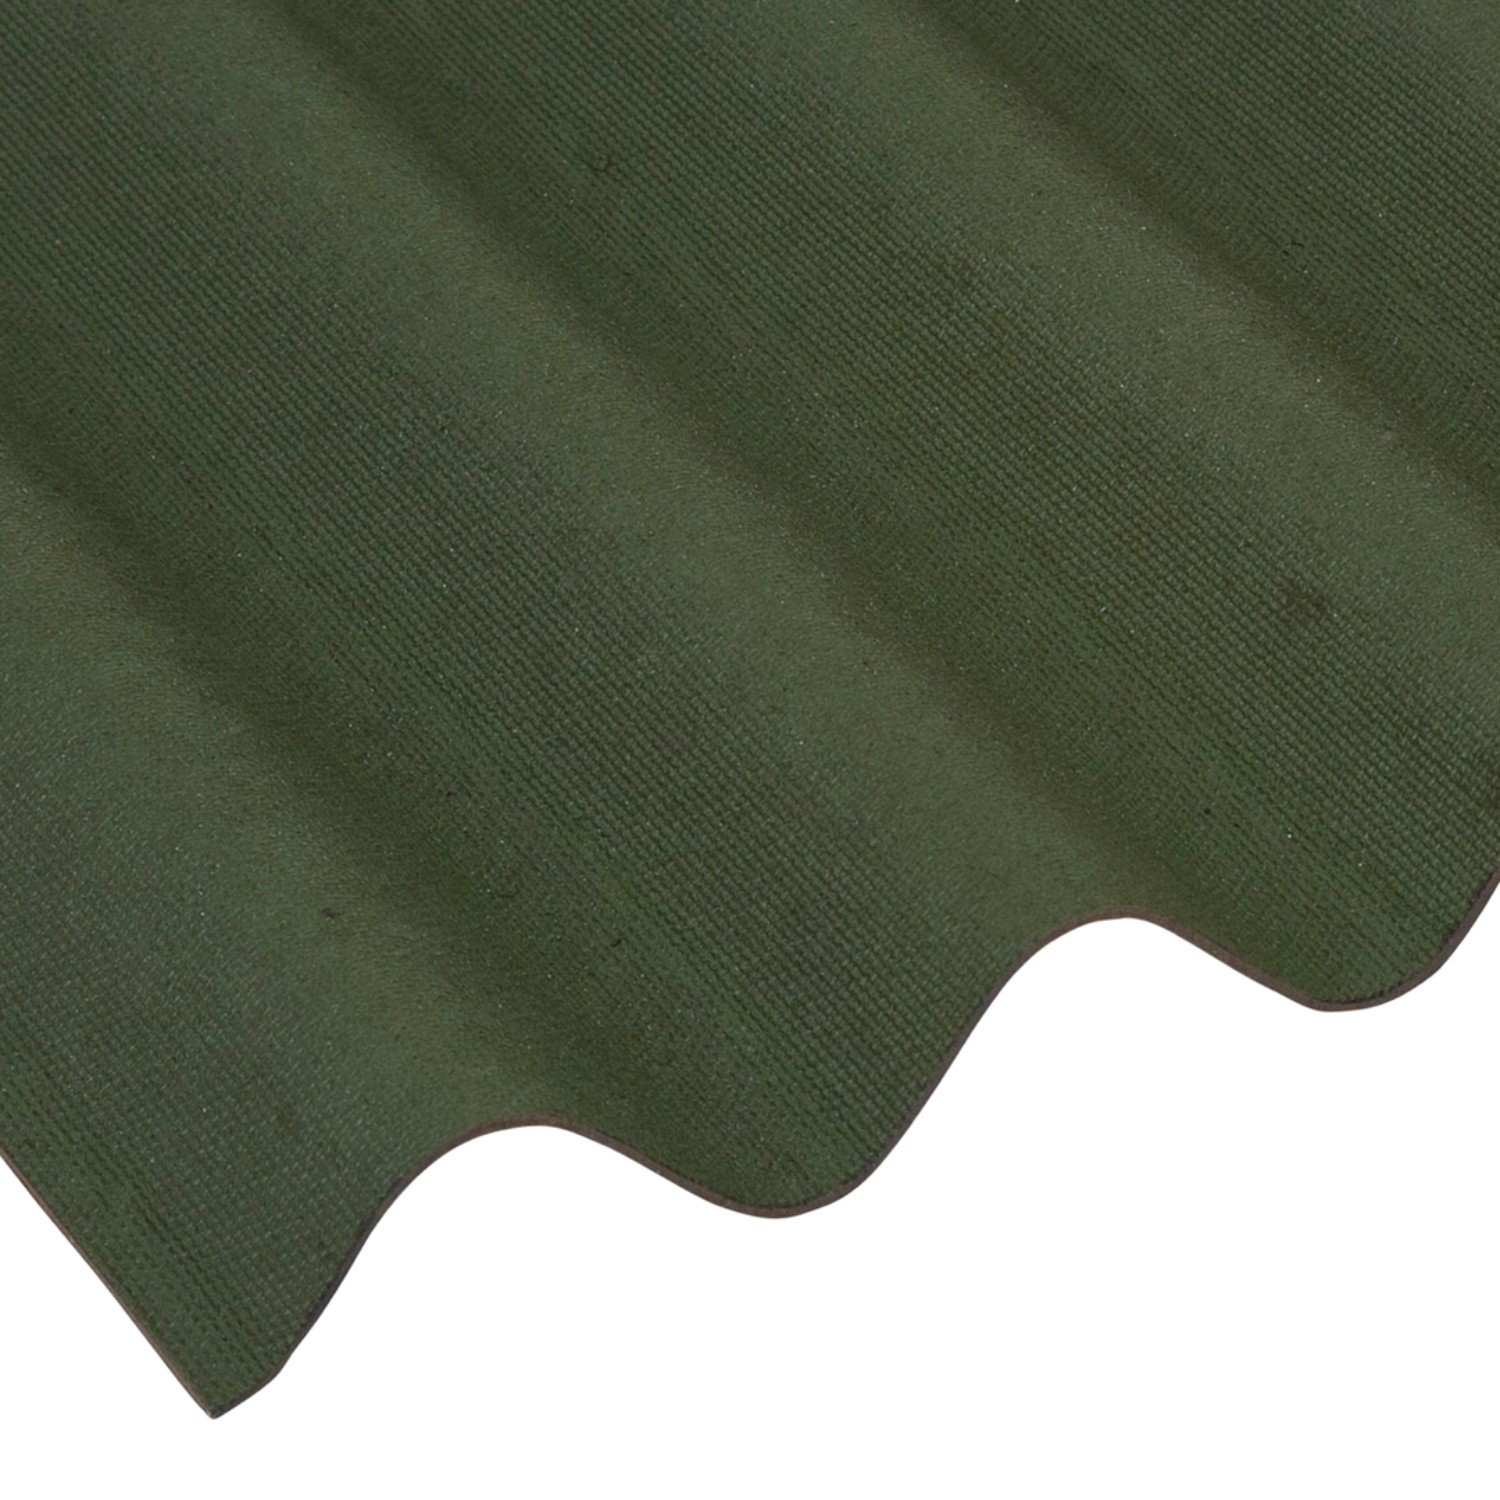 Coroline - Corrugated Bitumen Roof Sheet - Green (2000 x 950mm)